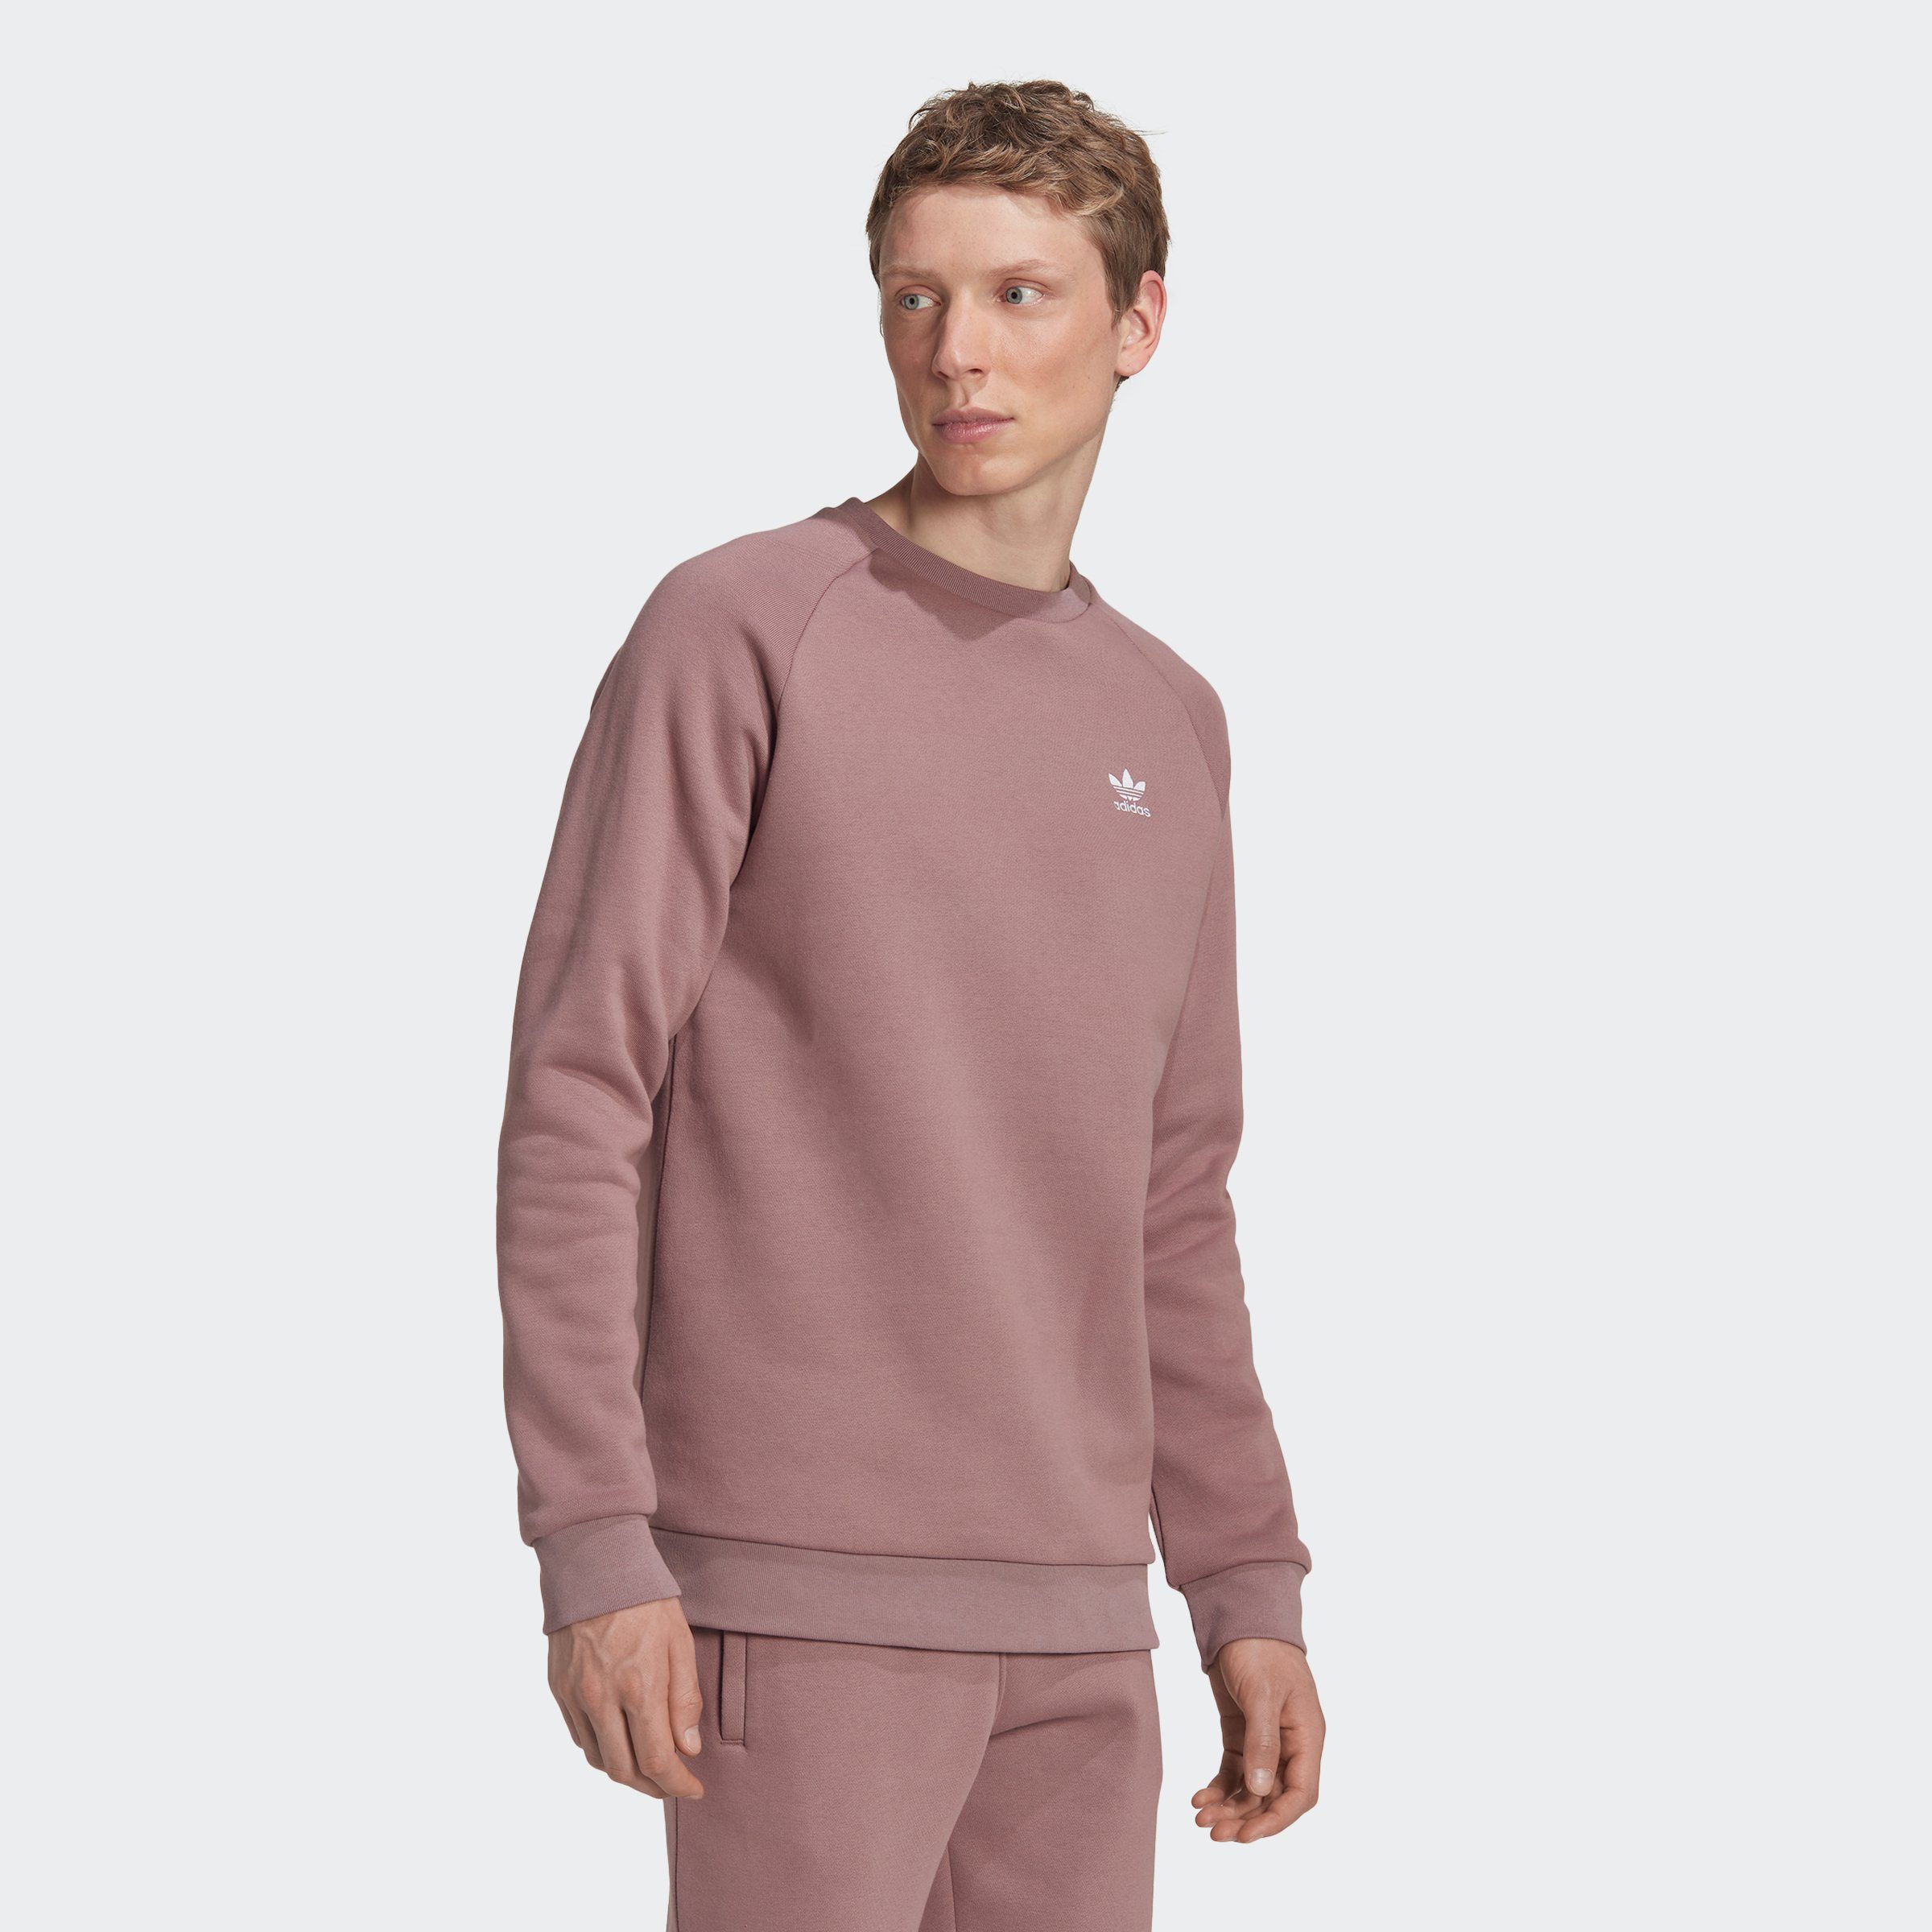 WONOXI adidas ADICOLOR TREFOIL Originals Sweatshirt ESSENTIALS